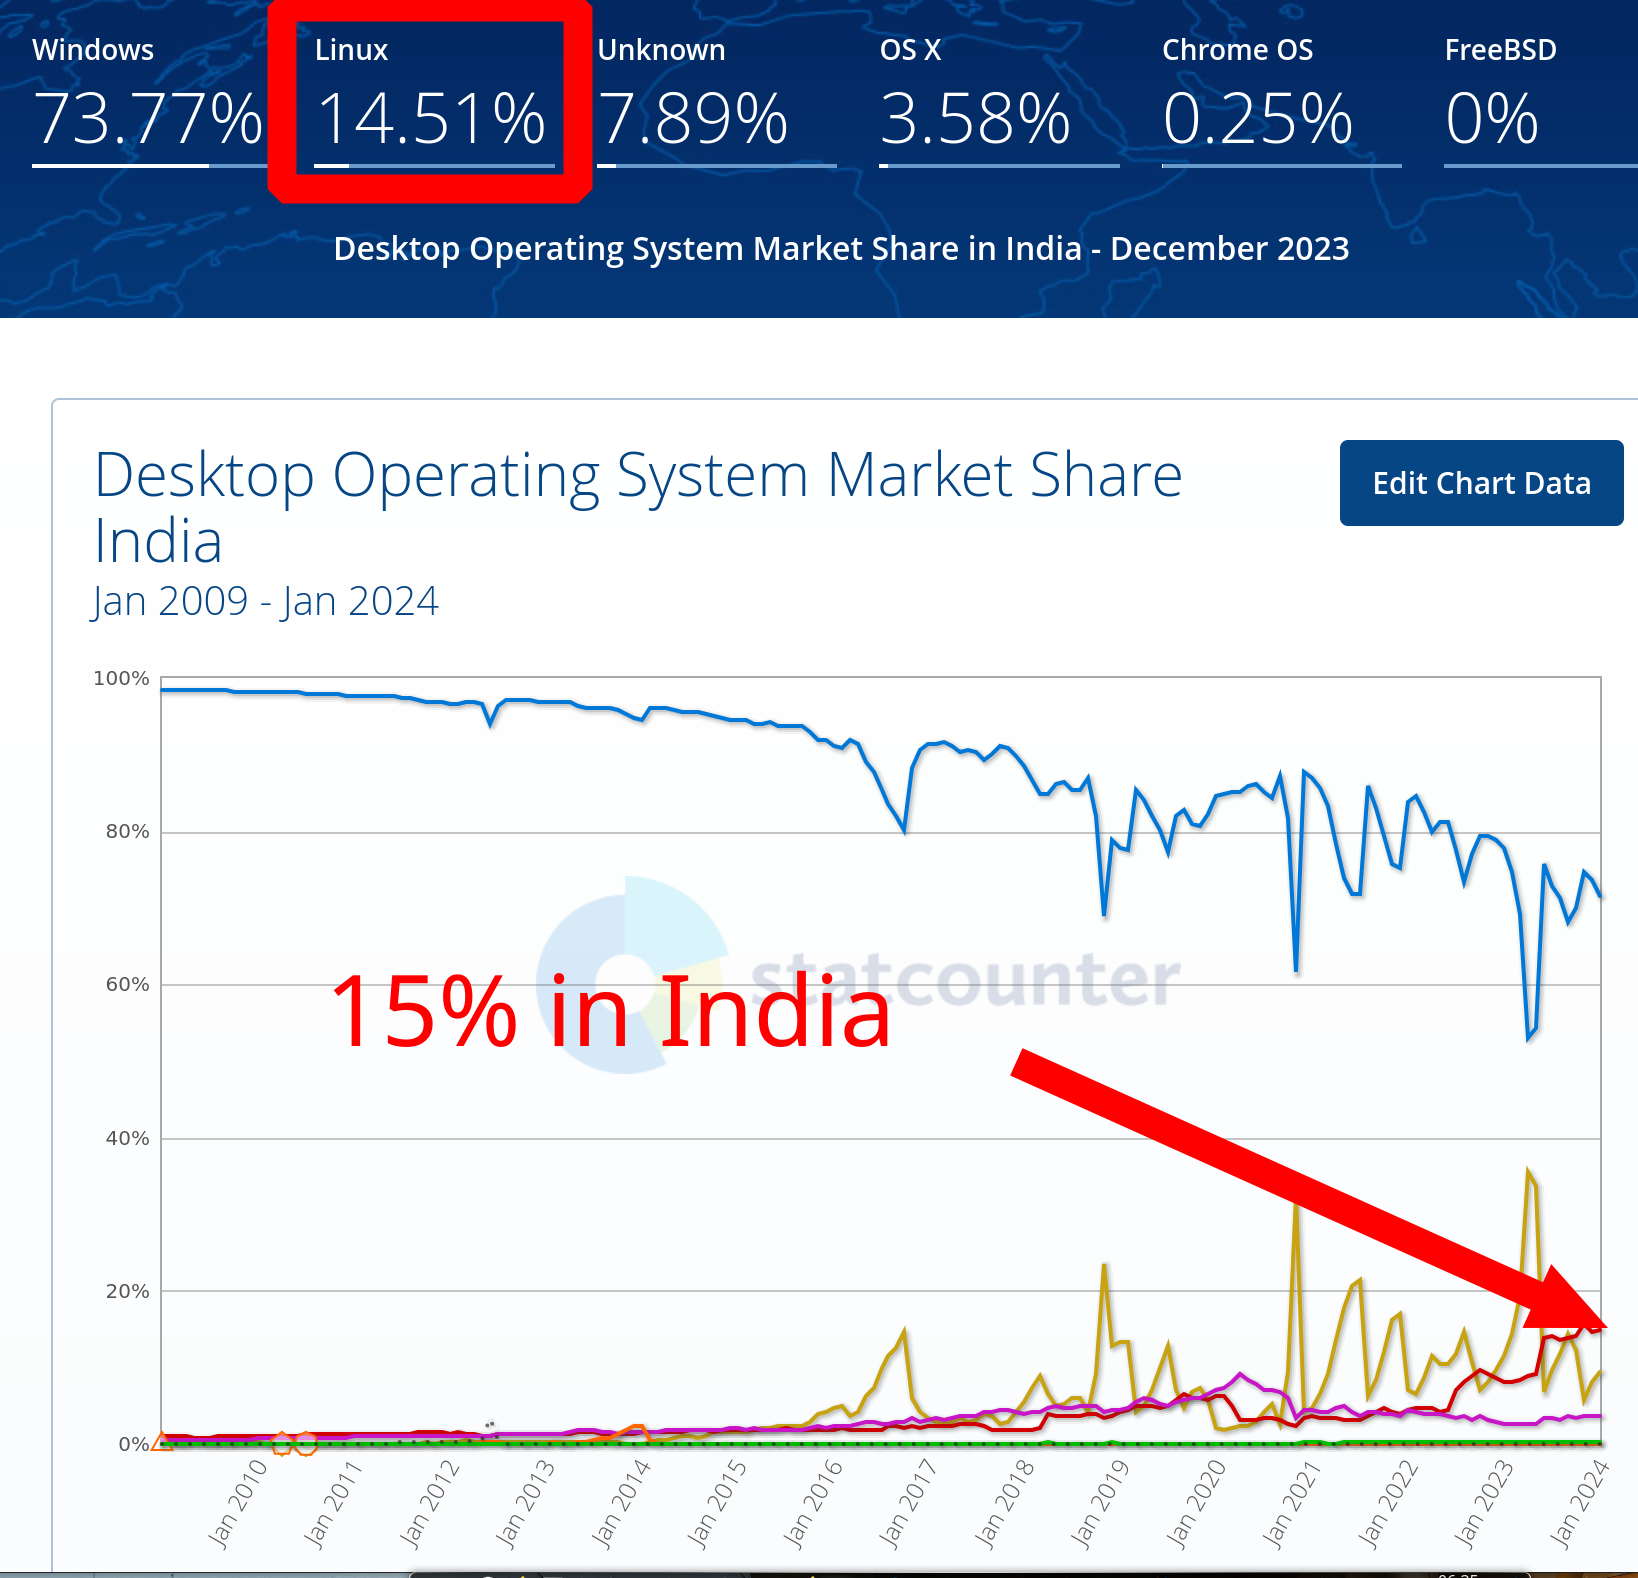 Desktop Operating System Market Share India: GNU/Linux 15% in India